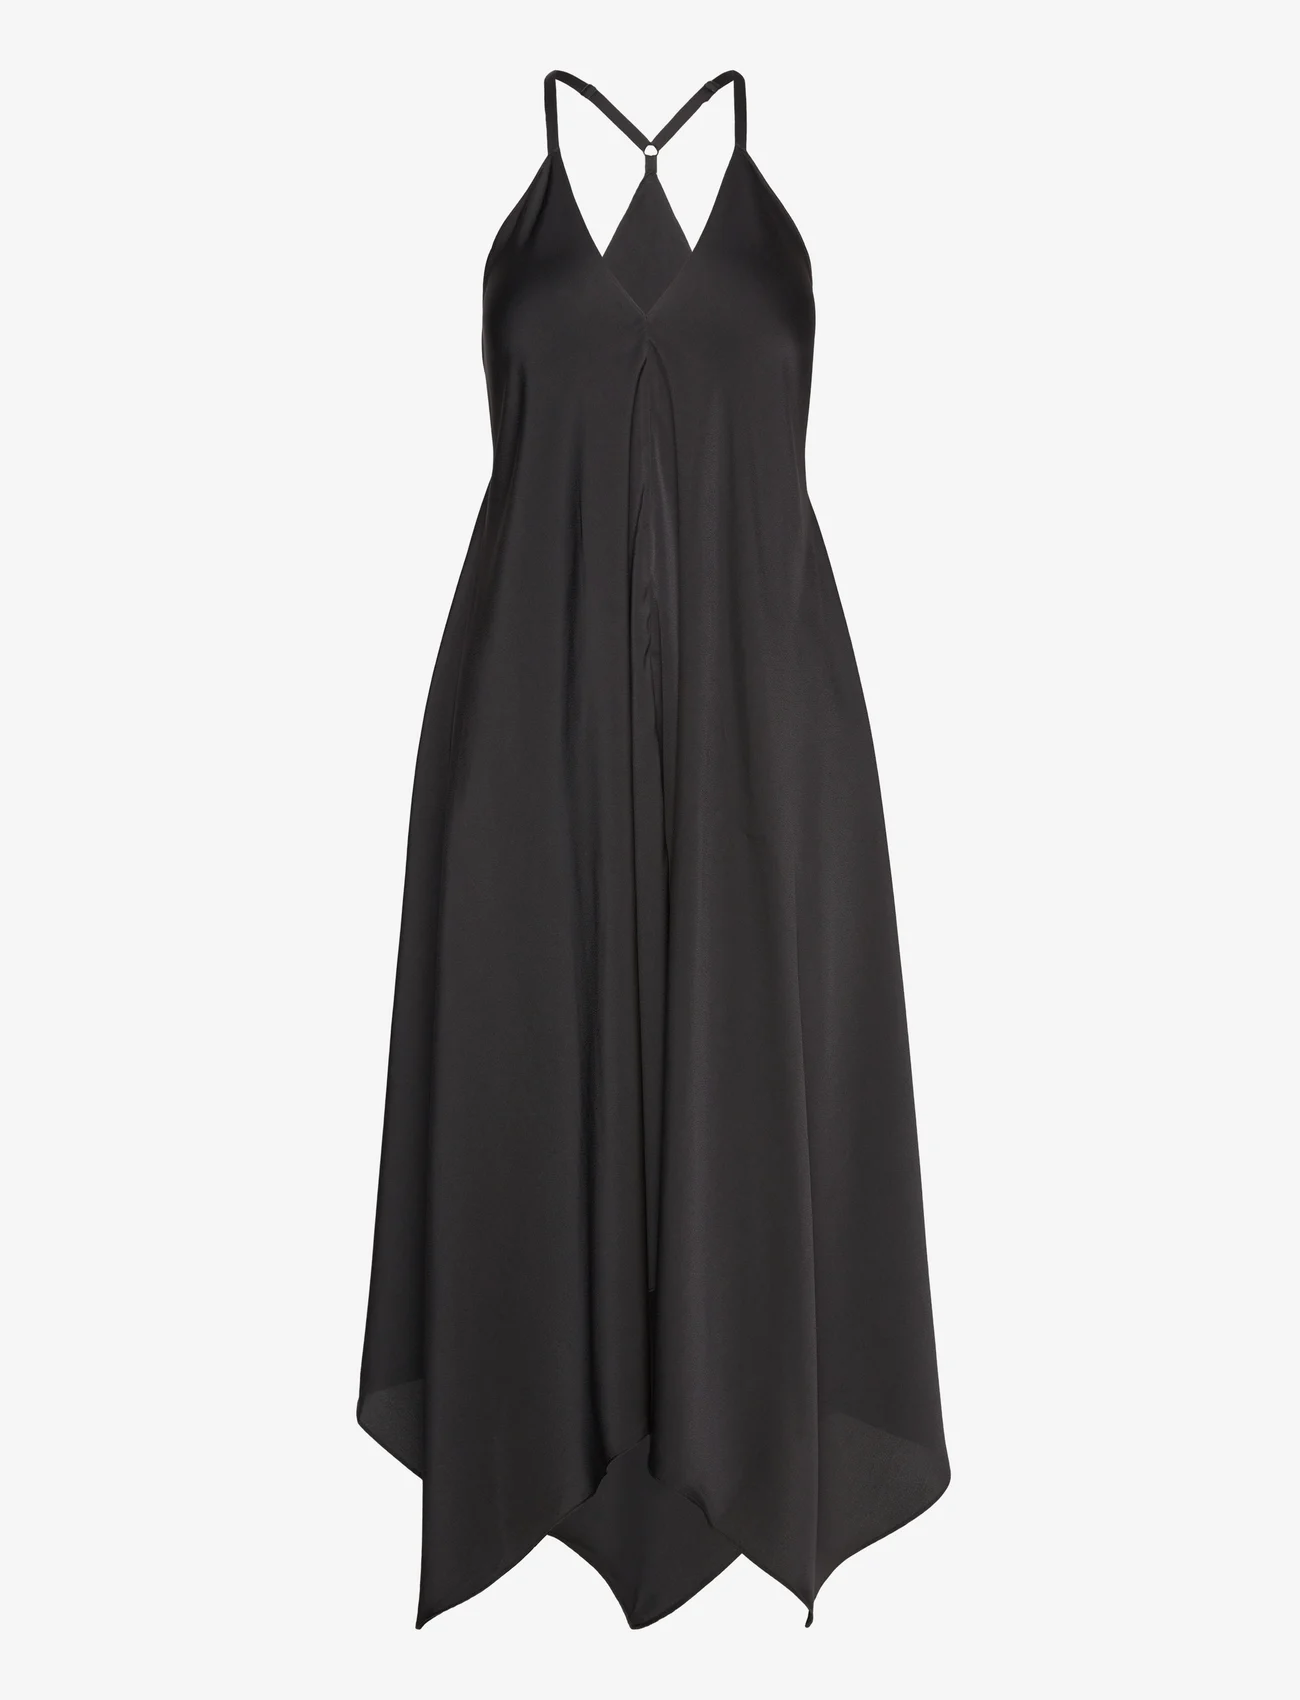 AllSaints - LIL DRESS - ballīšu apģērbs par outlet cenām - black - 0